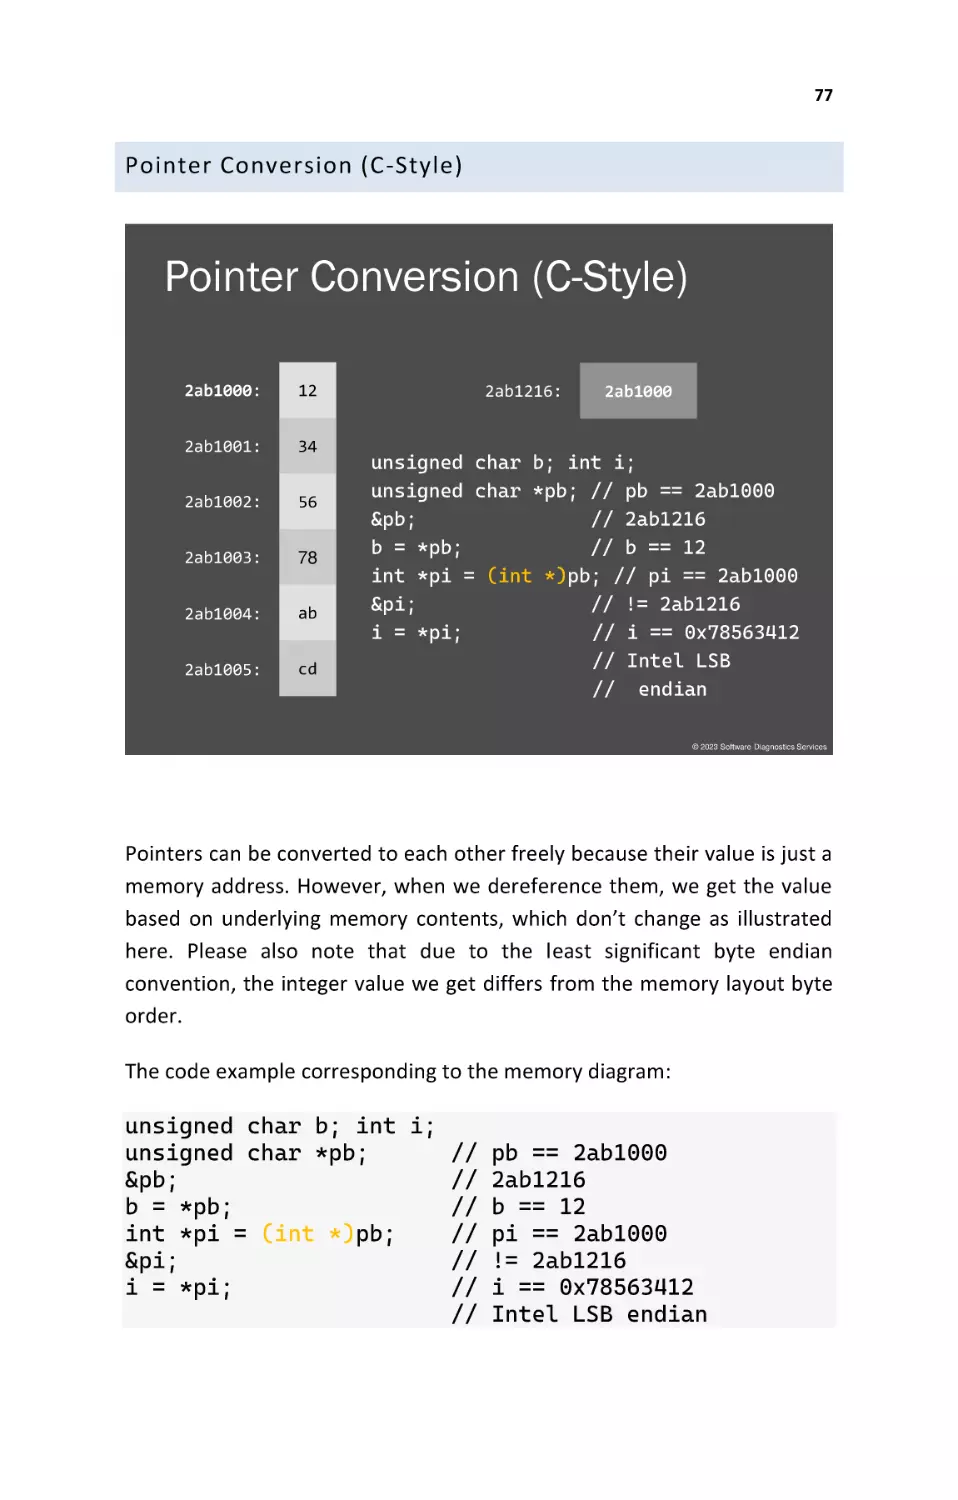 Pointer Conversion (C-Style)